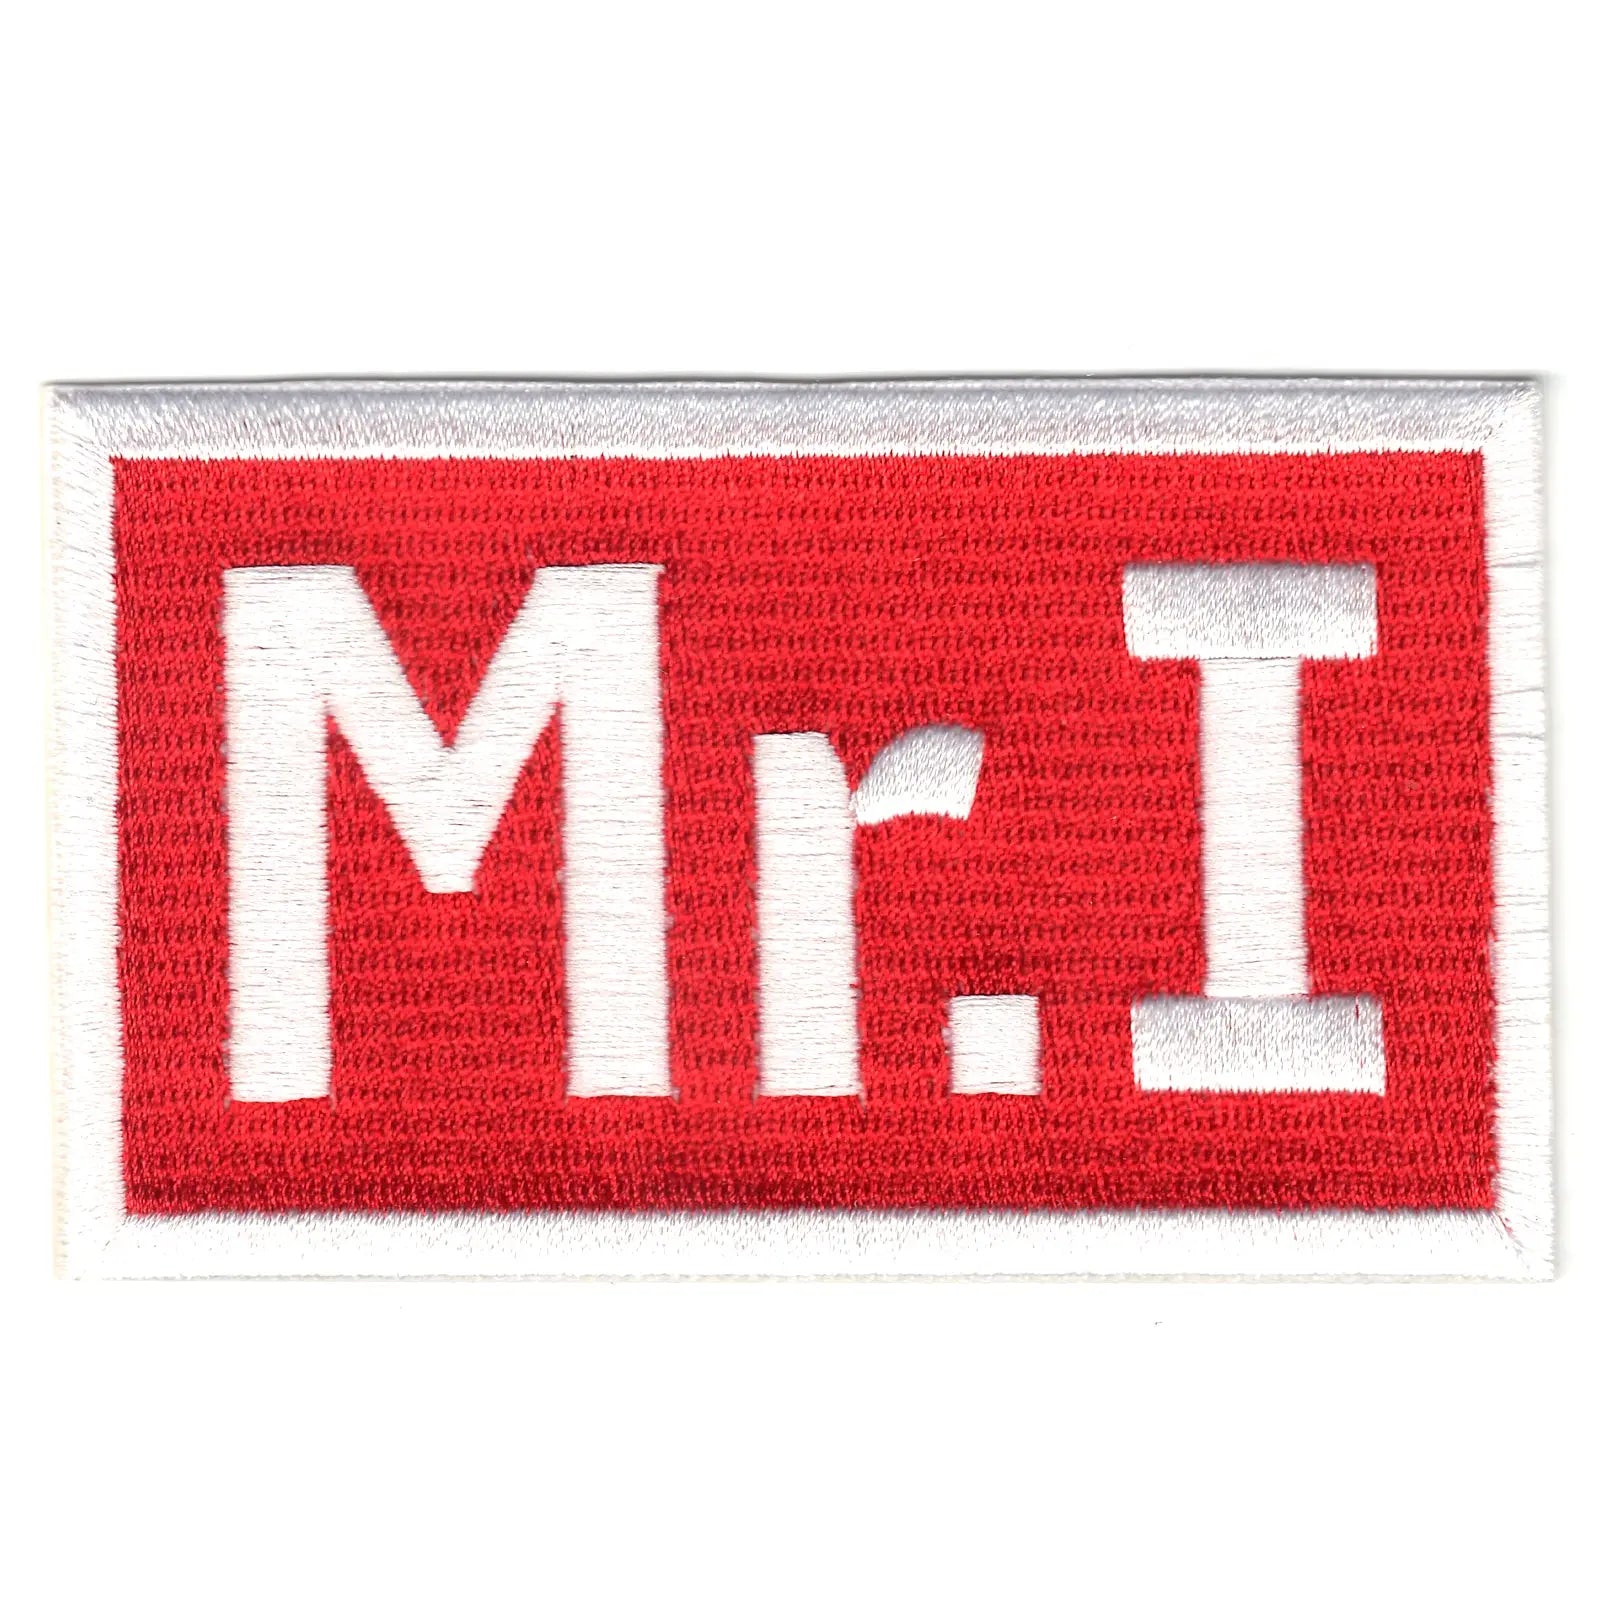 Mr 01